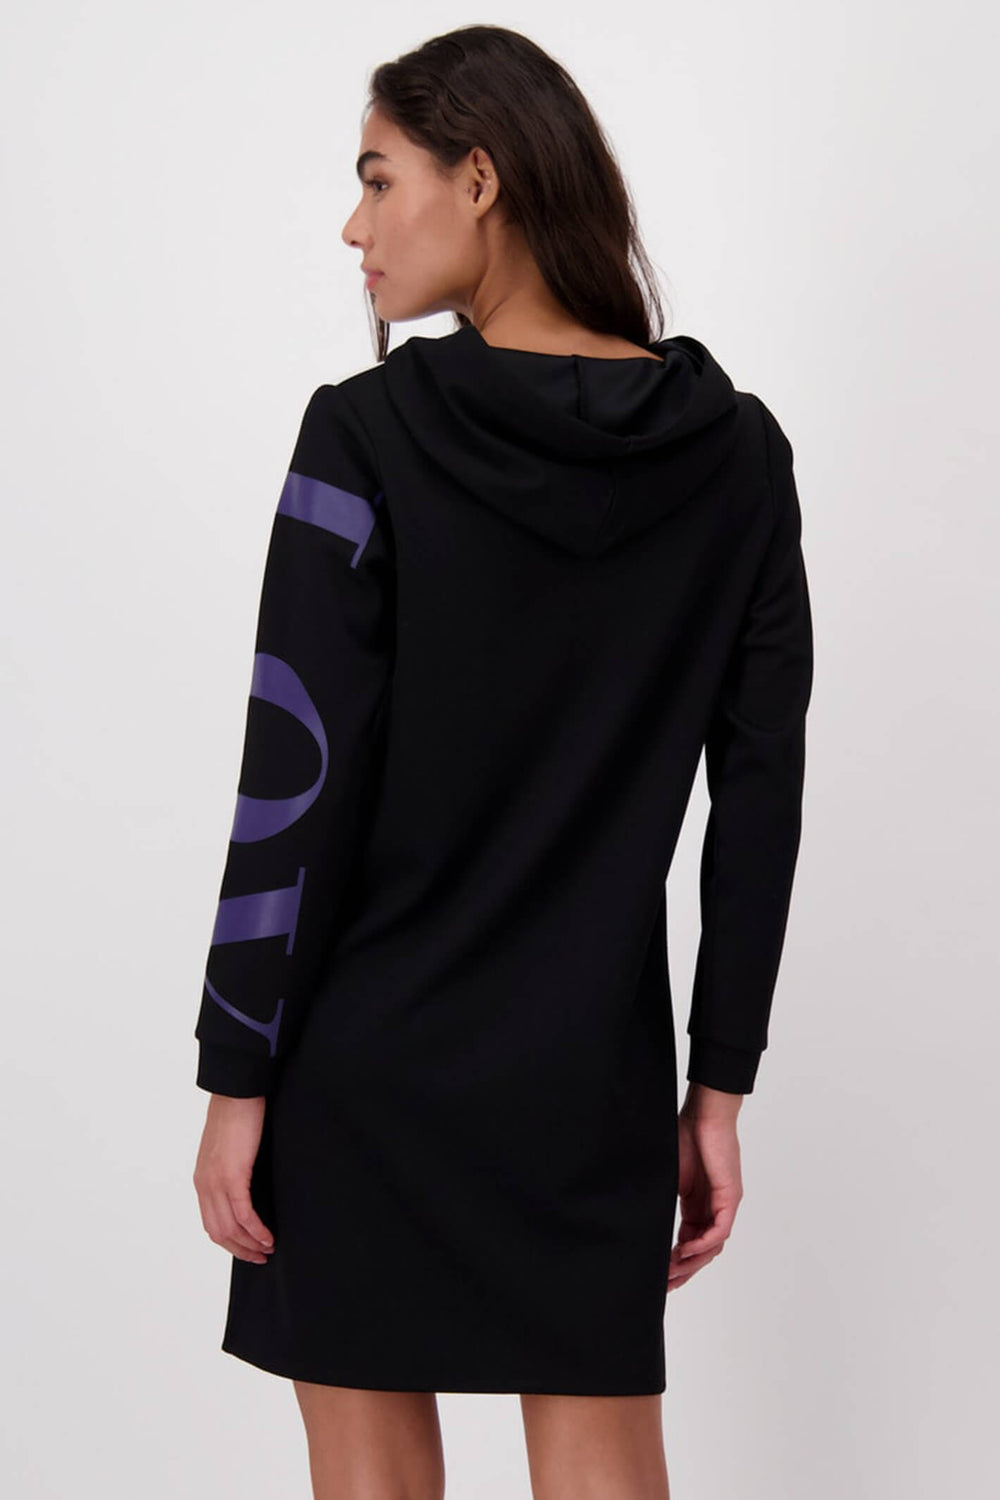 Monari 806988 Black Jumper Dress - Experience Boutique